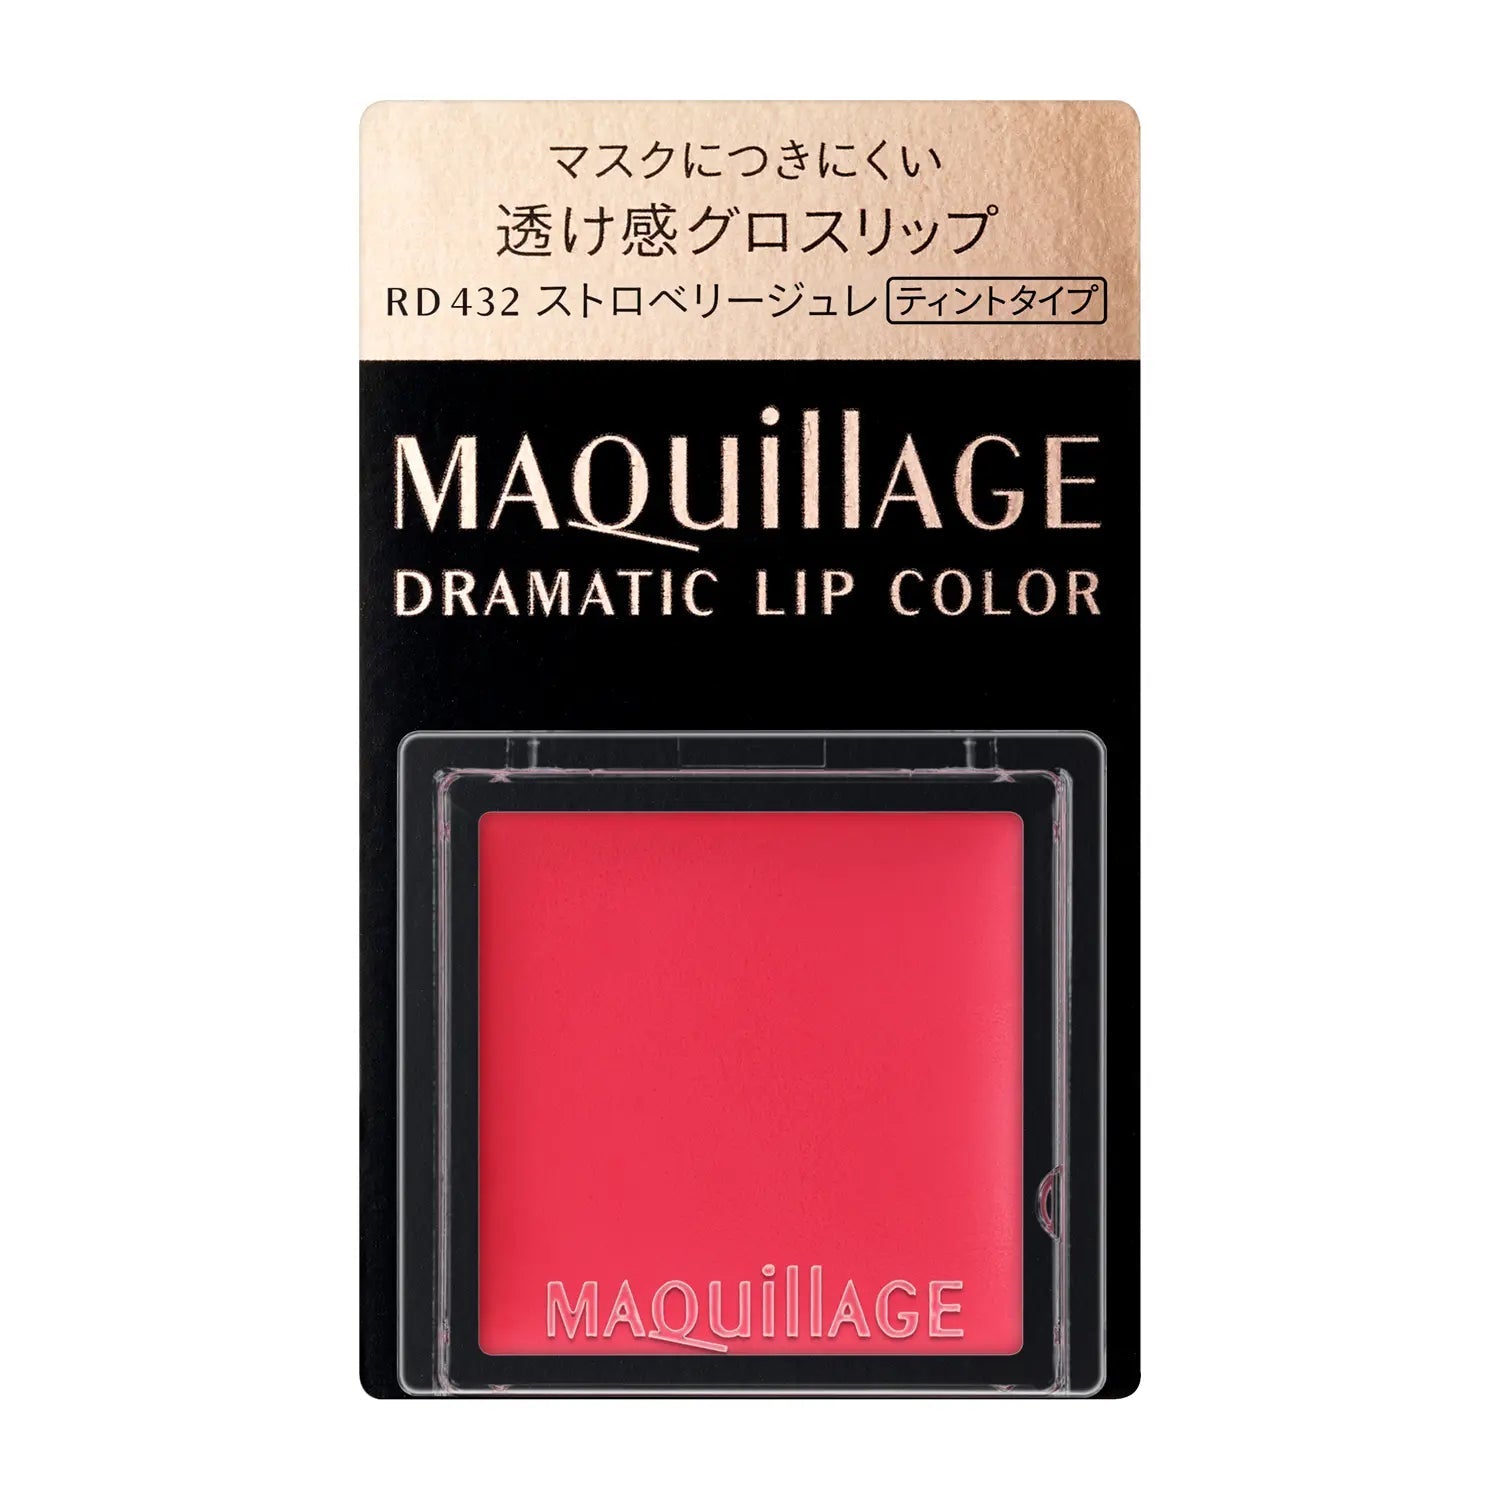 Maquillage Dramatic Lip Color (Glossy) - Ichiban Mart